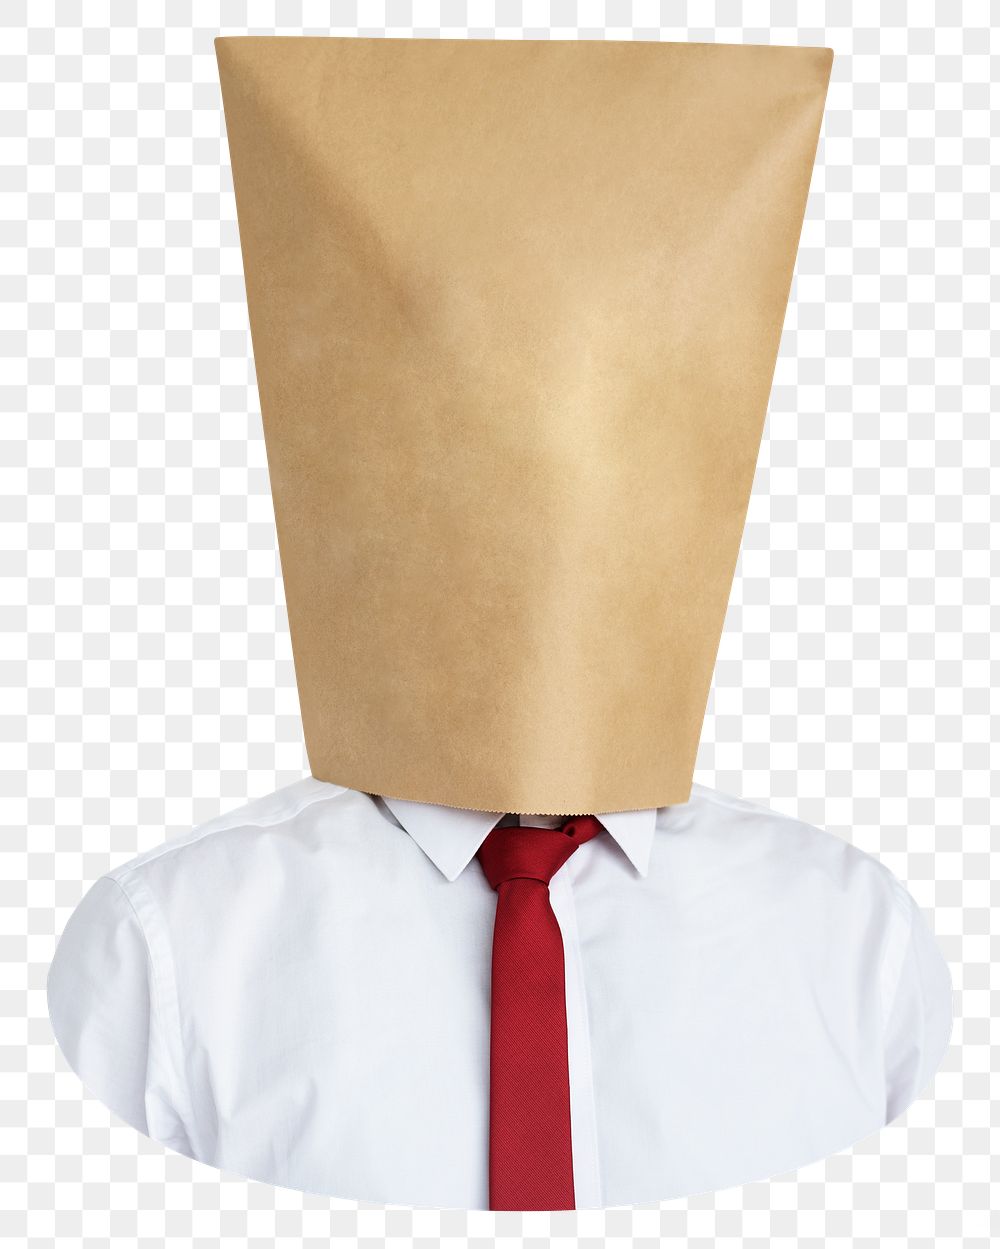 Bag covering png businessman's head sticker, transparent background